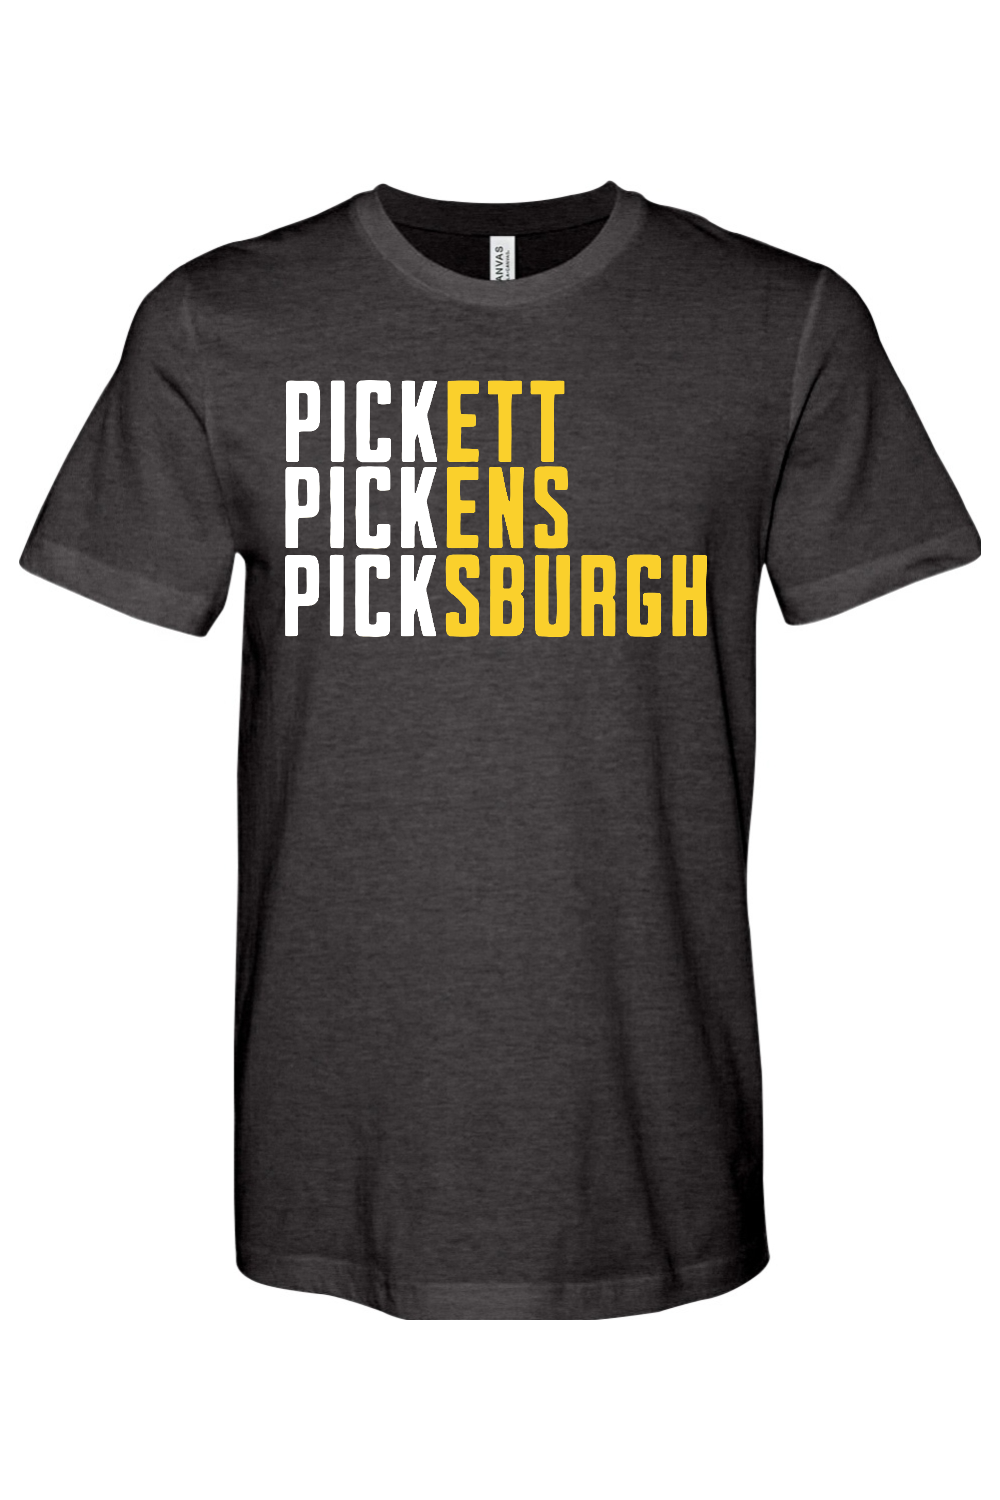 Pickett Pickens Picksburgh - Yinzylvania